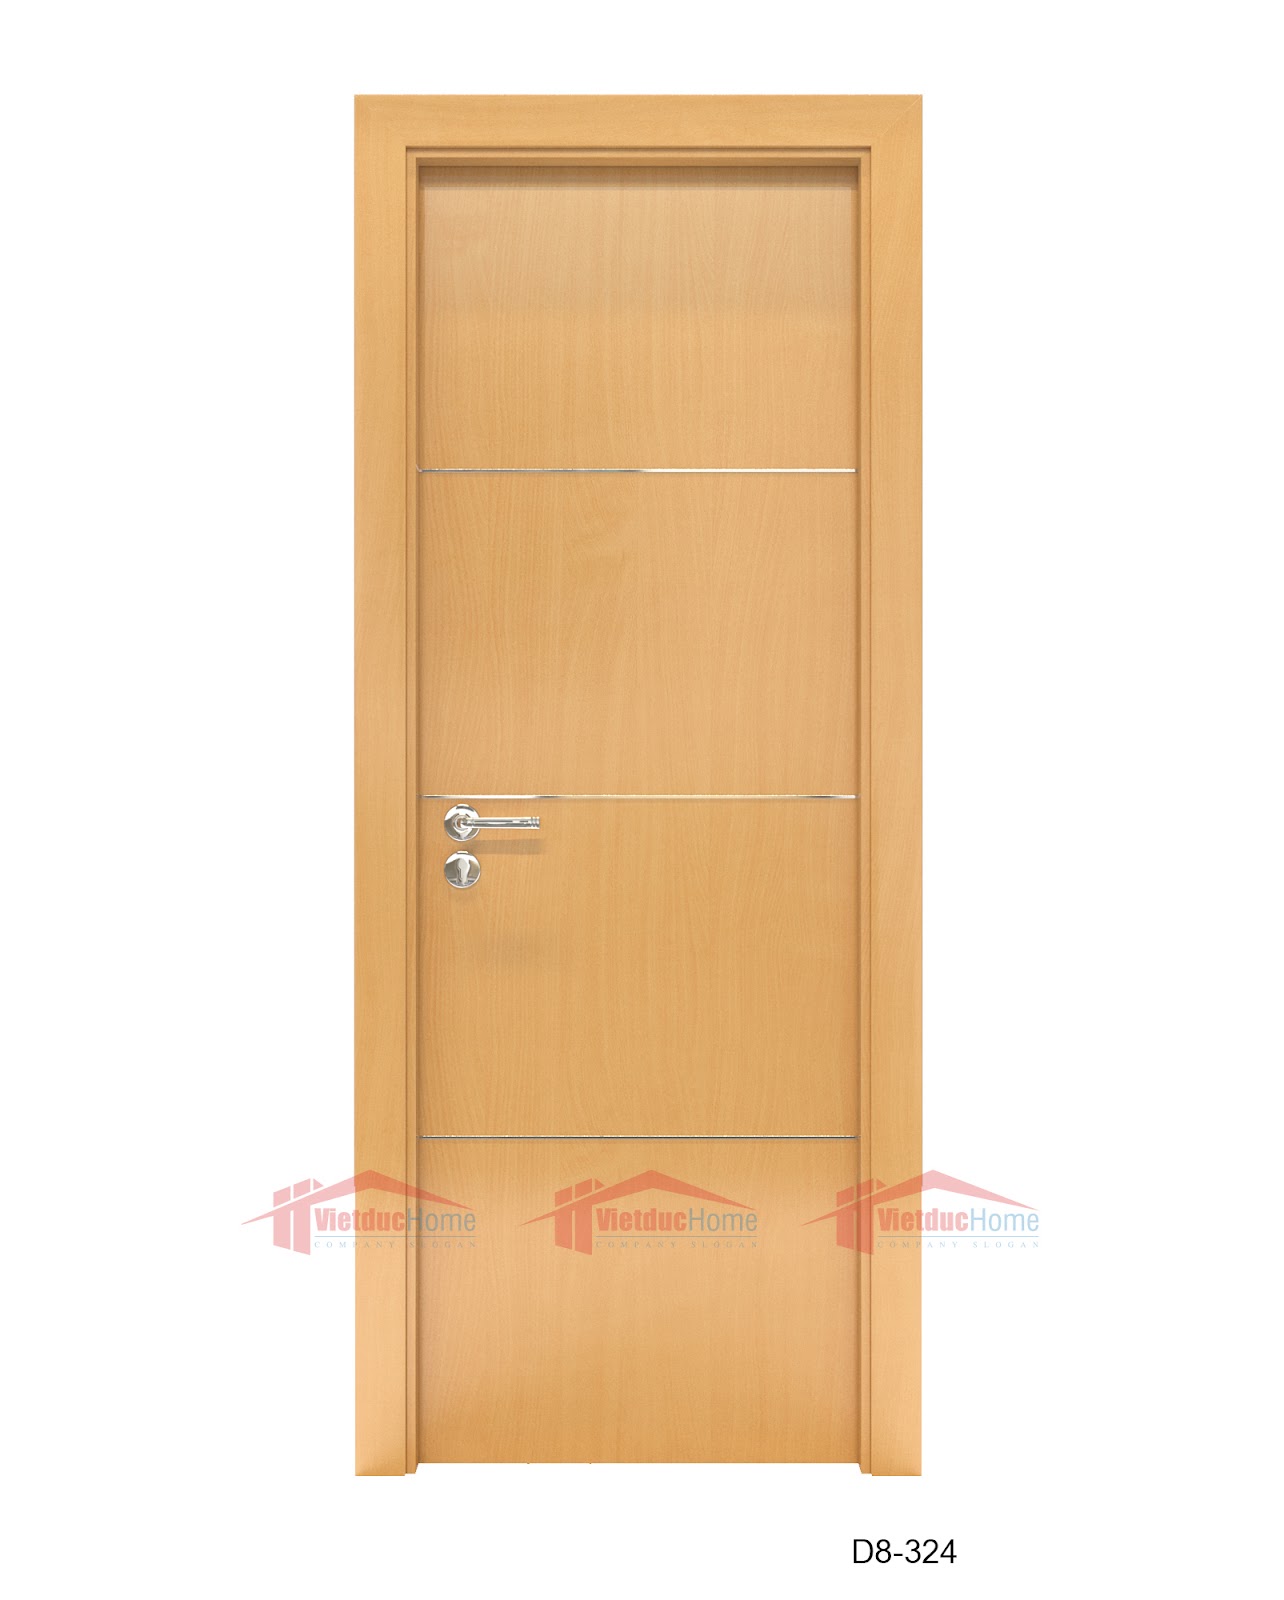 Mẫu cửa nhựa gỗ composite đẹp D8-324.